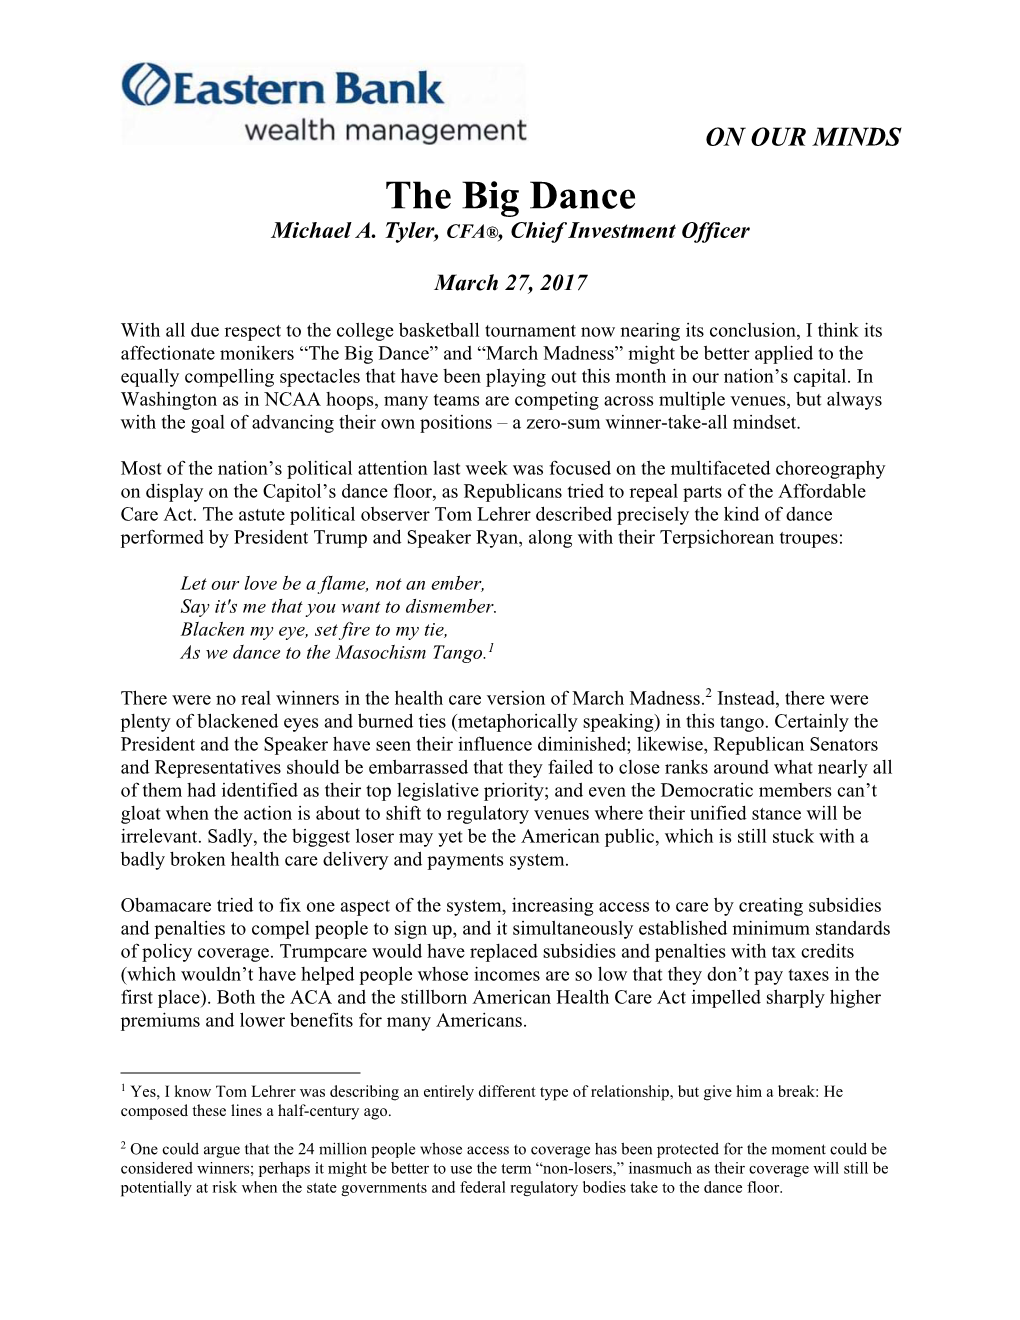 The Big Dance Michael A